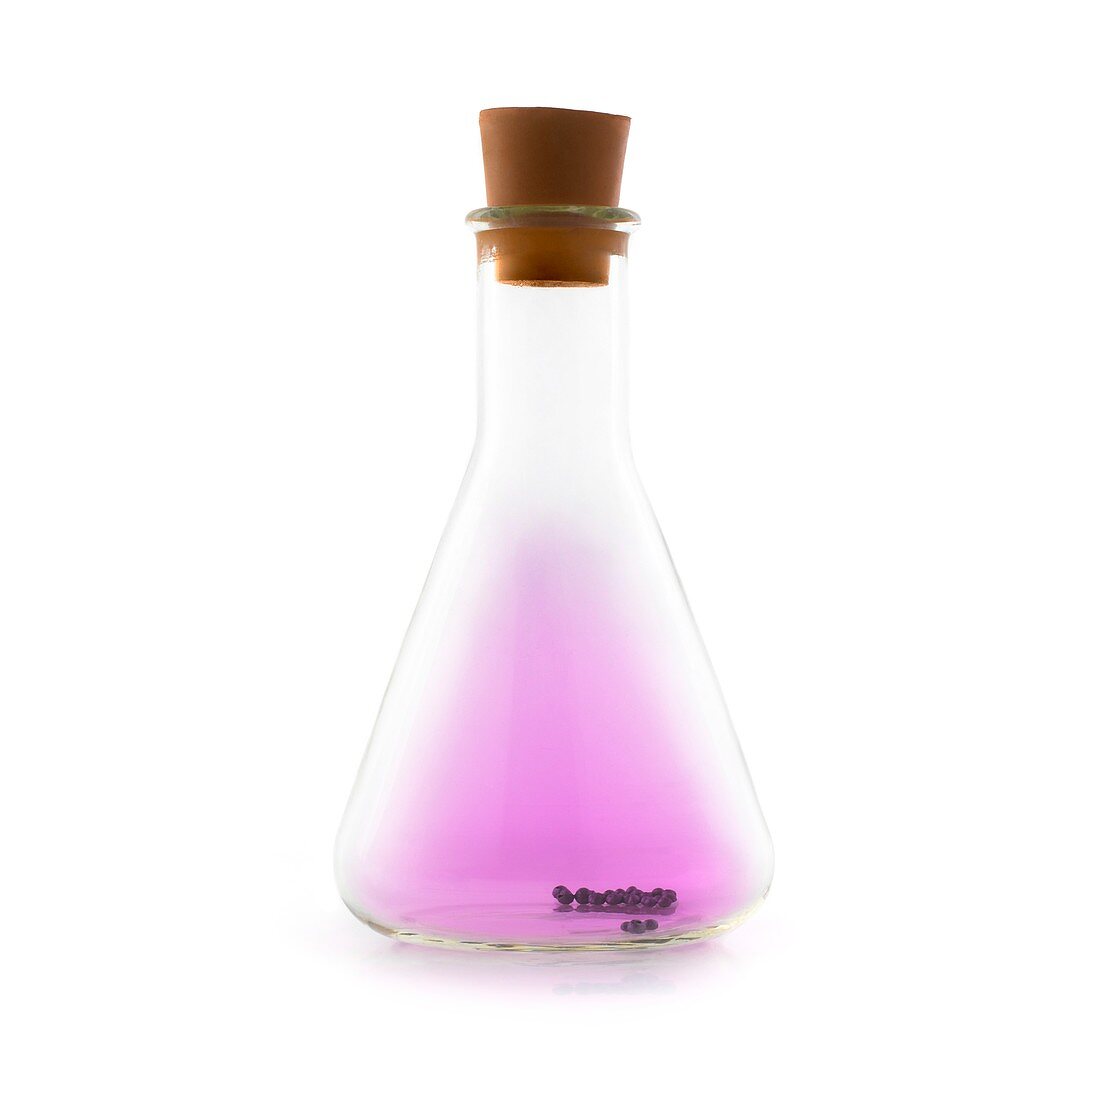 Flask containing iodine